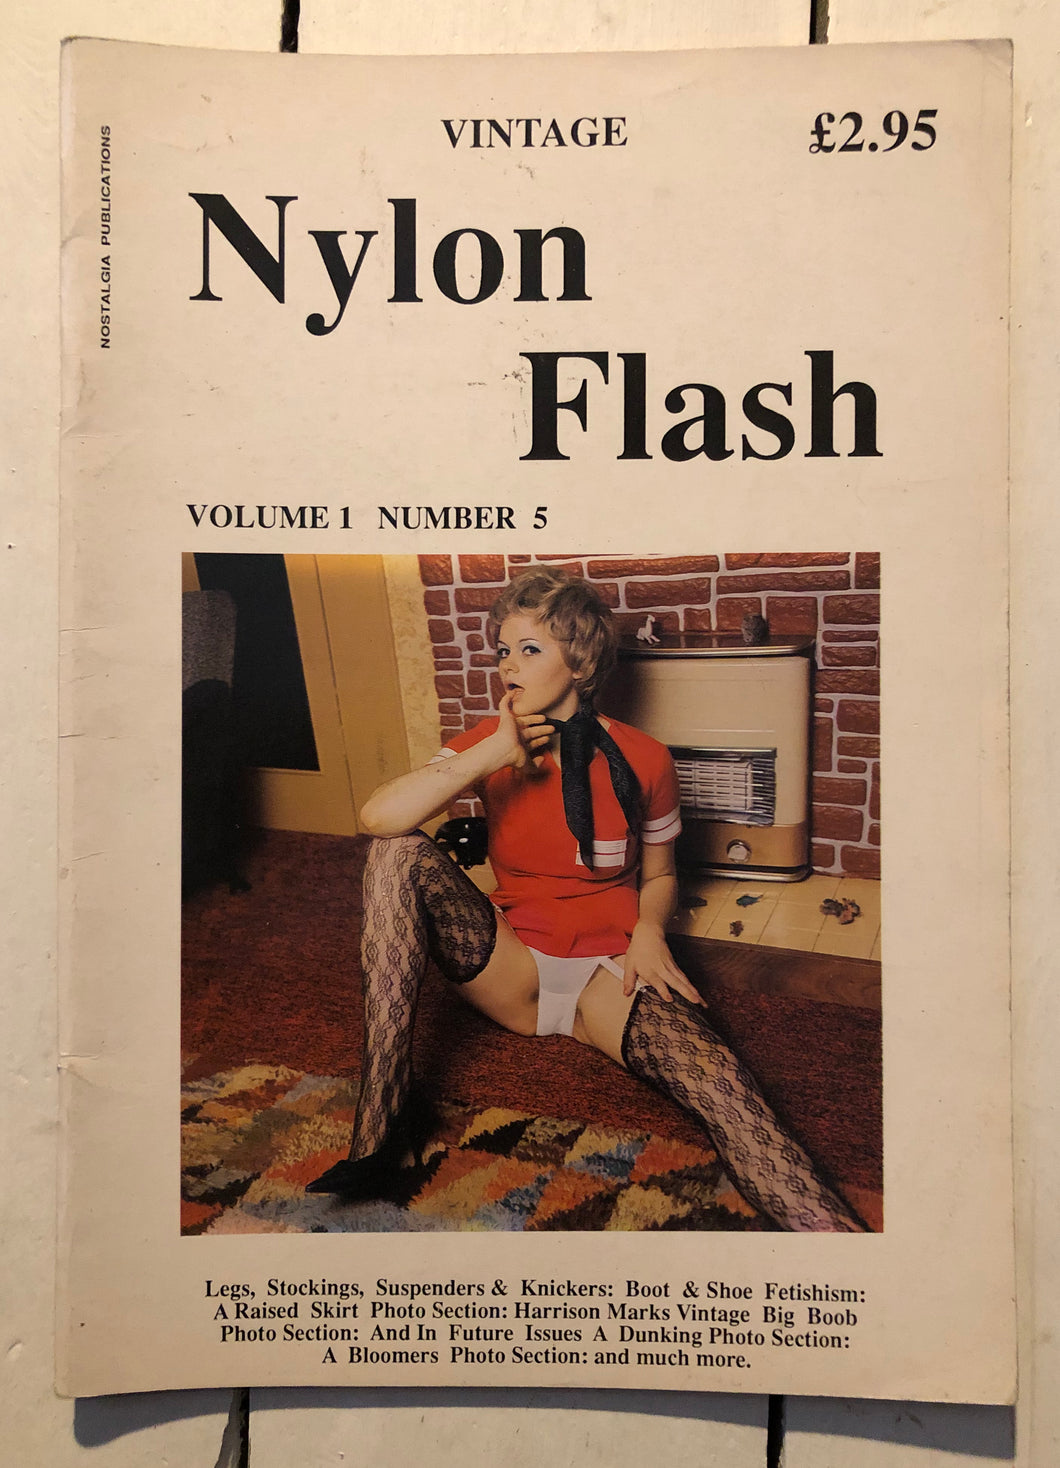 Nylon Flash Vol 1 No 5